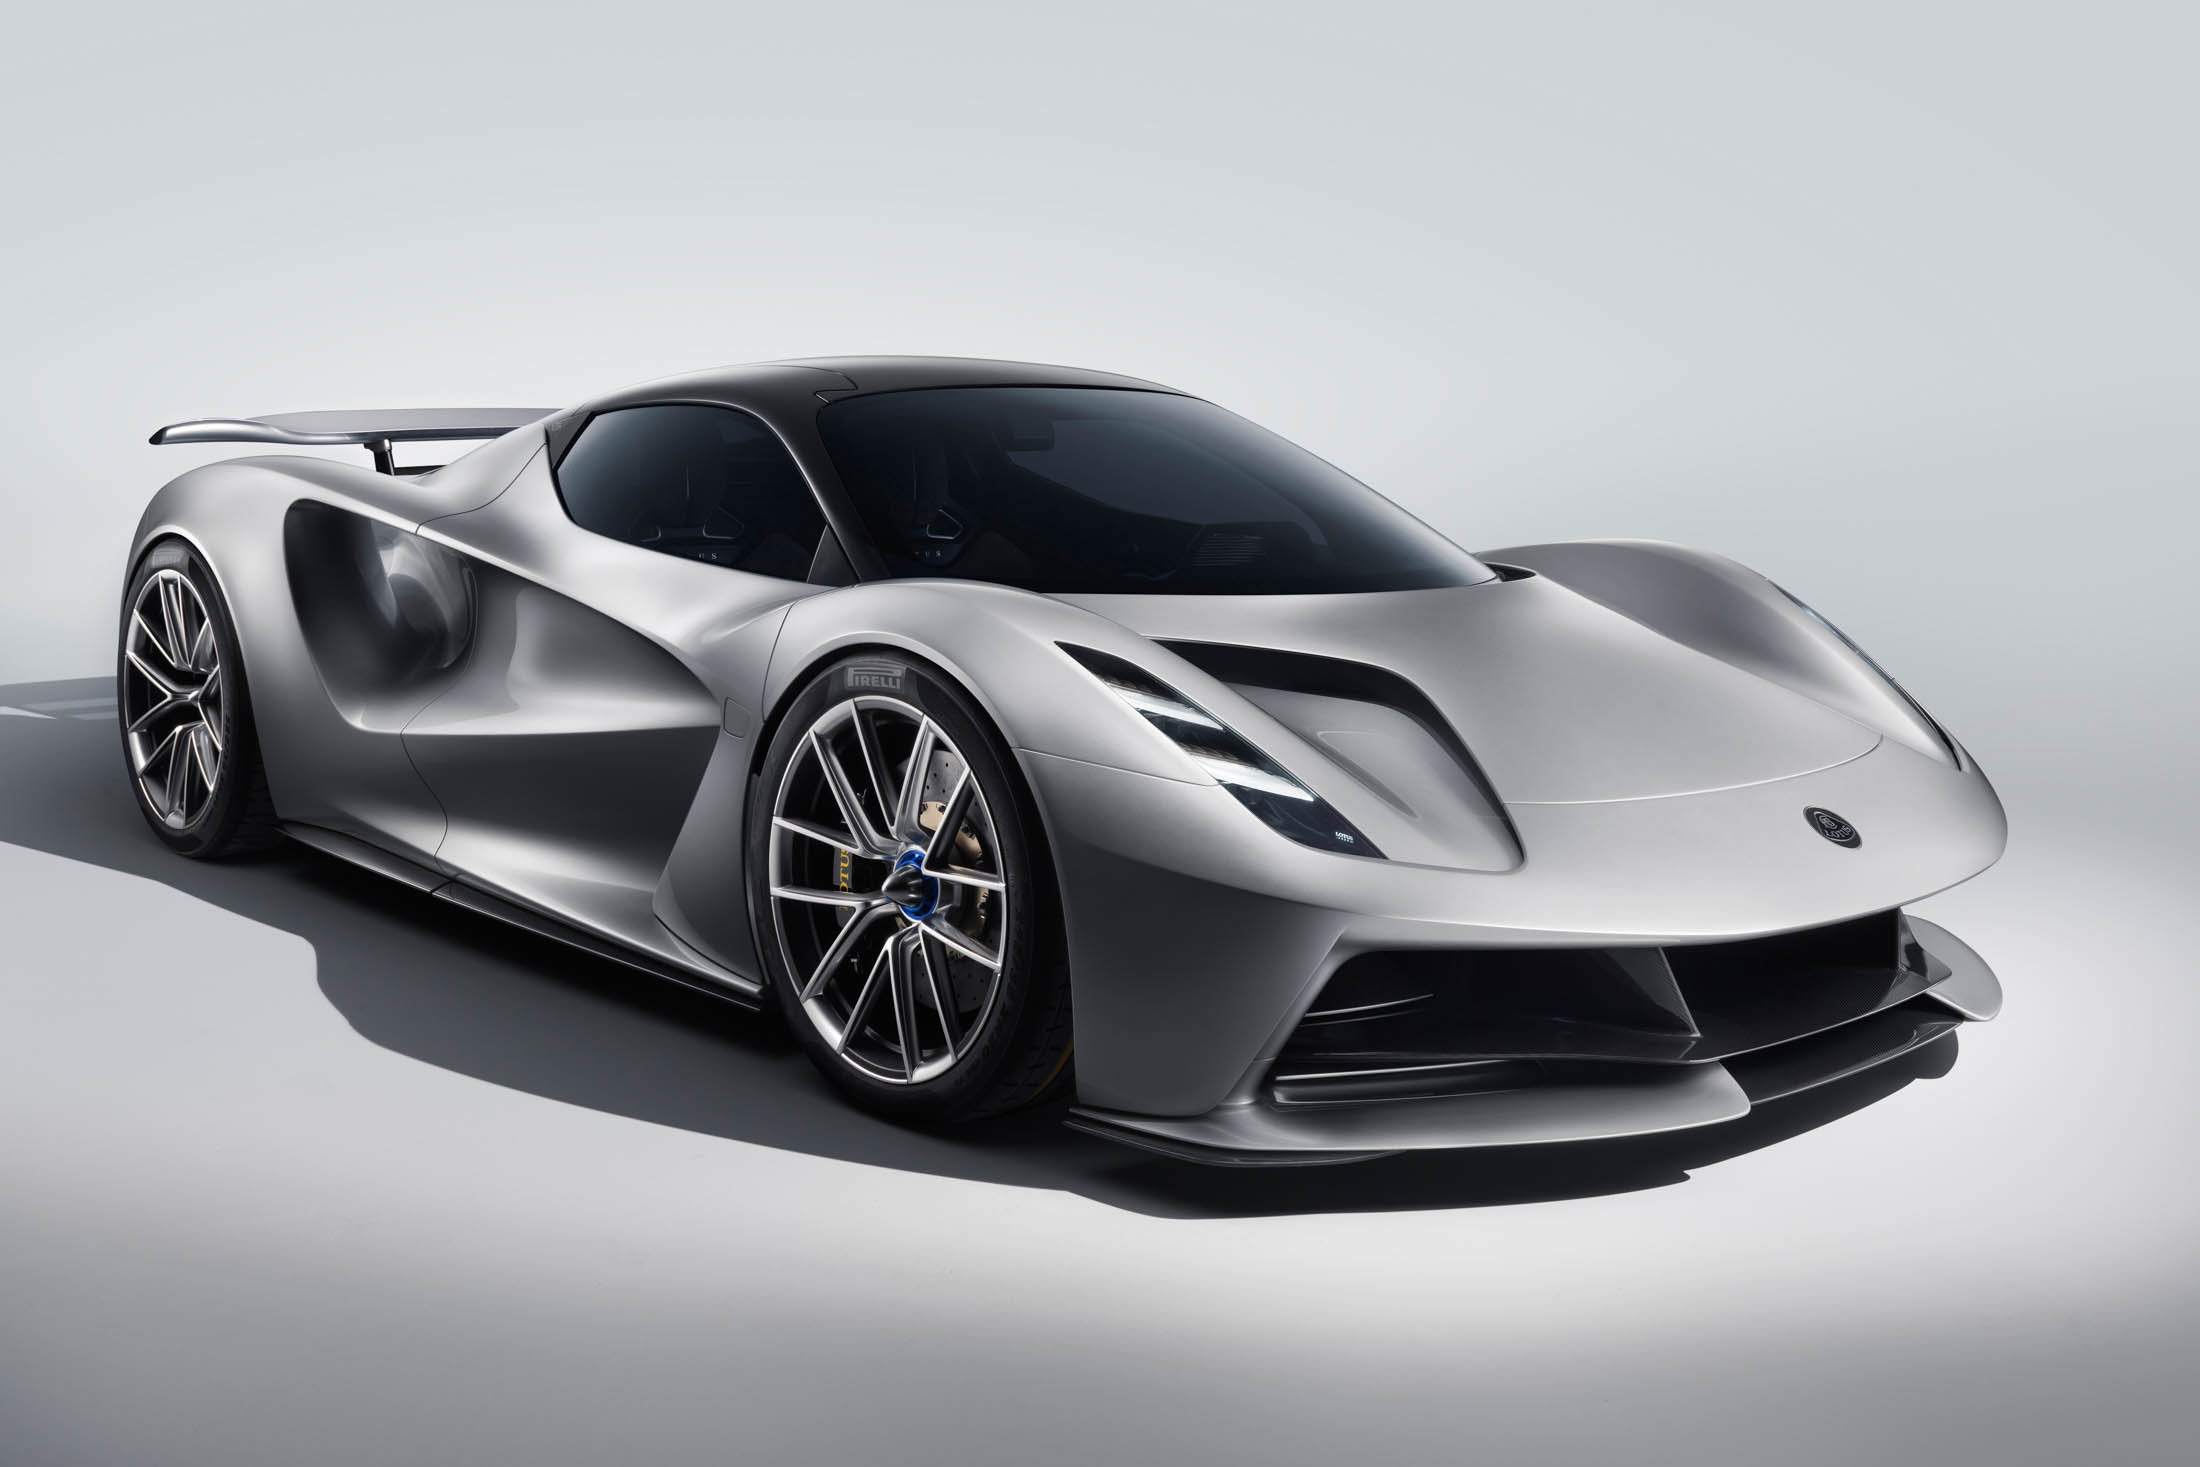 New Lotus Car: Electric Evija Supercar Specs, Photos - Bloomberg